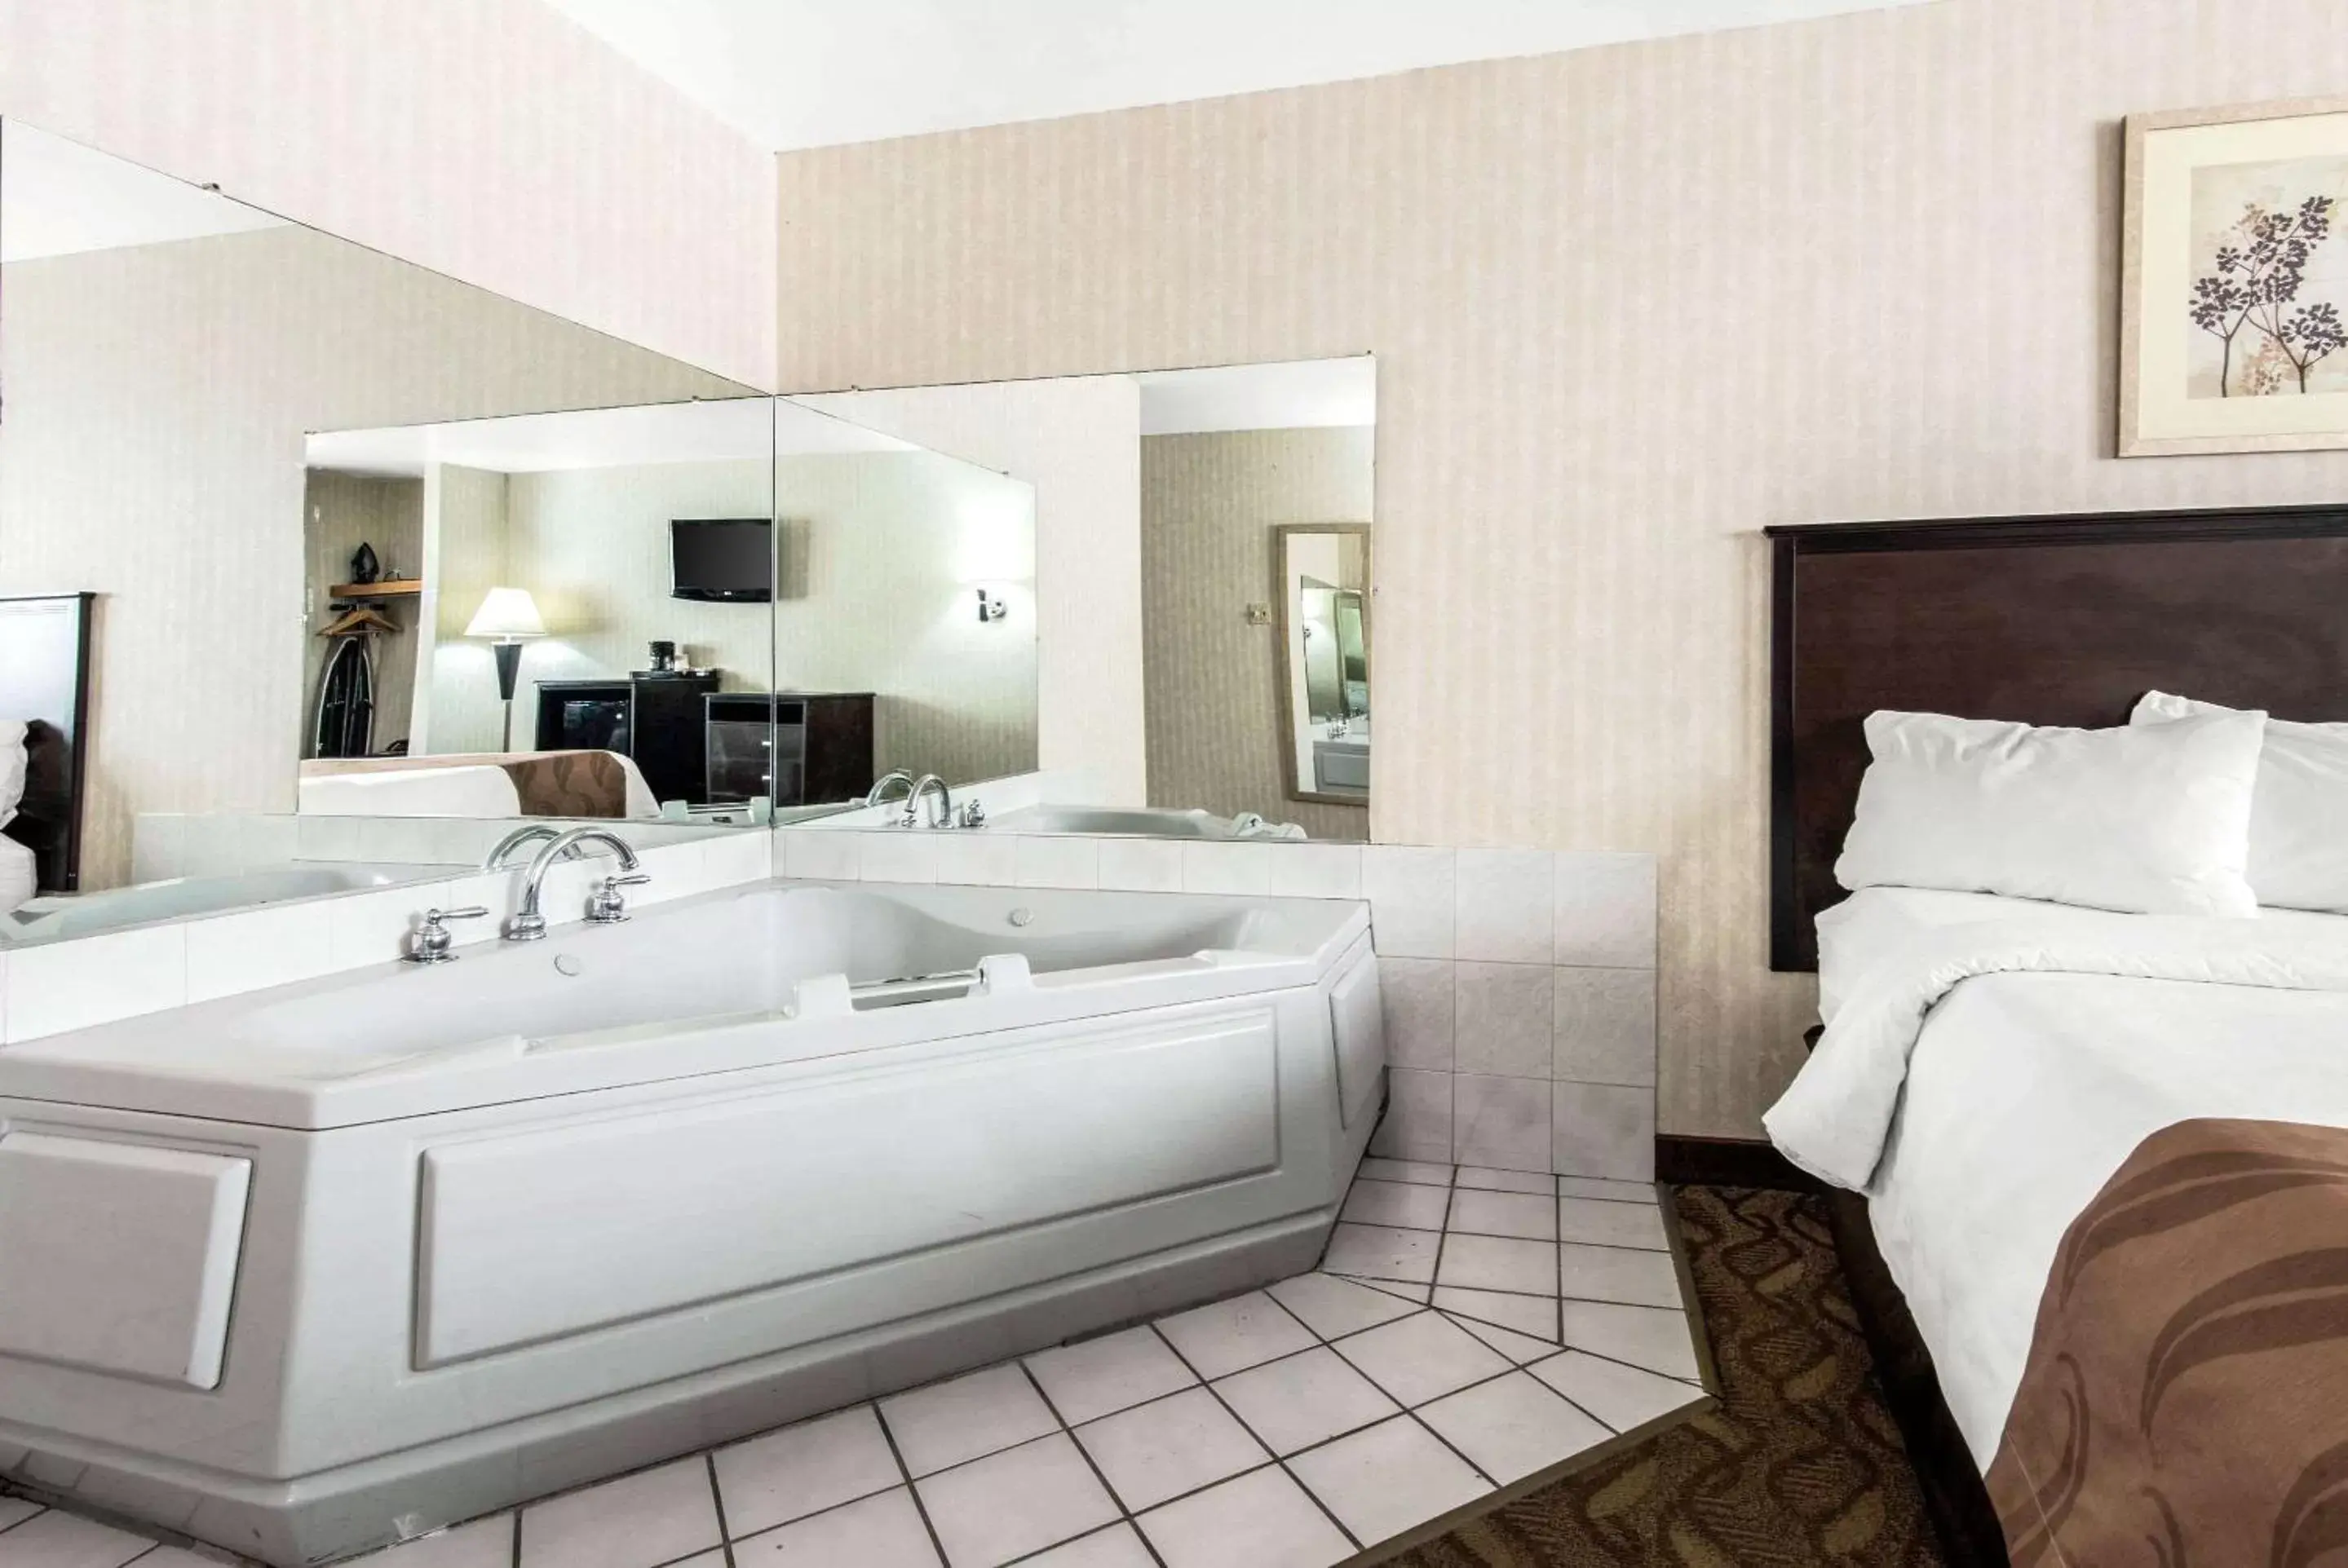 Photo of the whole room, Bathroom in Quality Inn Niagara Falls